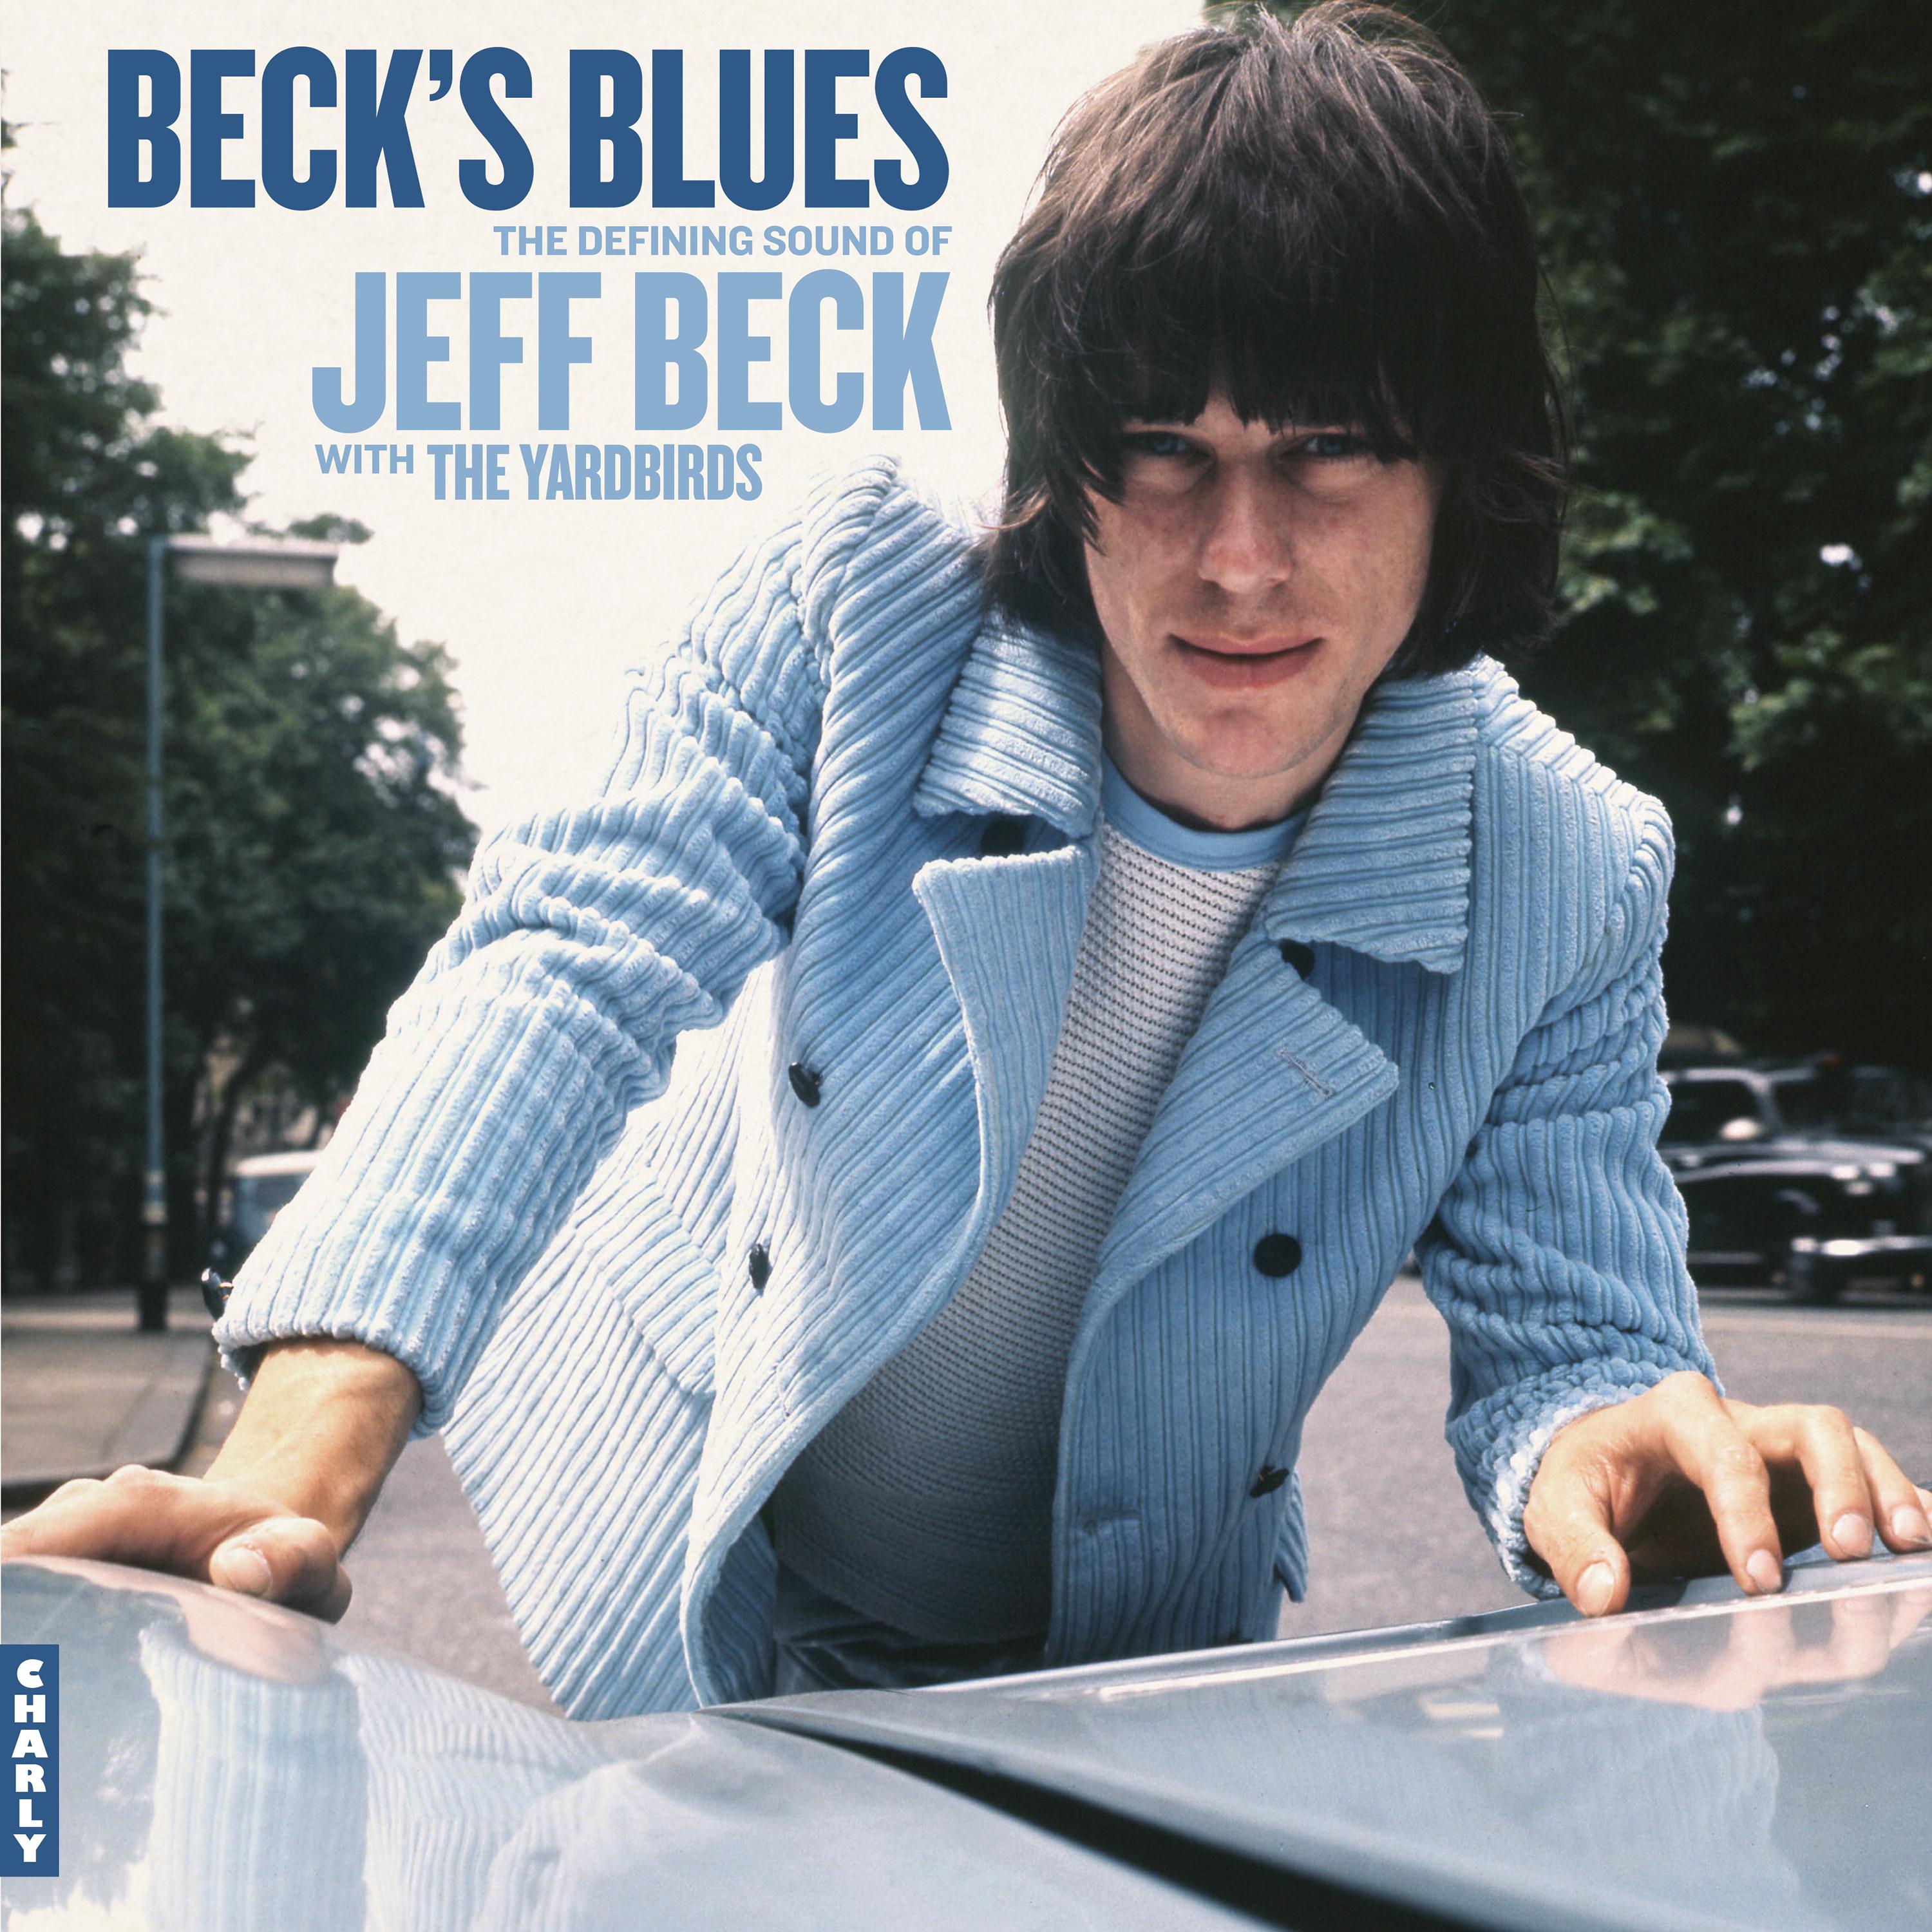 Jeff Beck - The Train Kept A-Rollin'